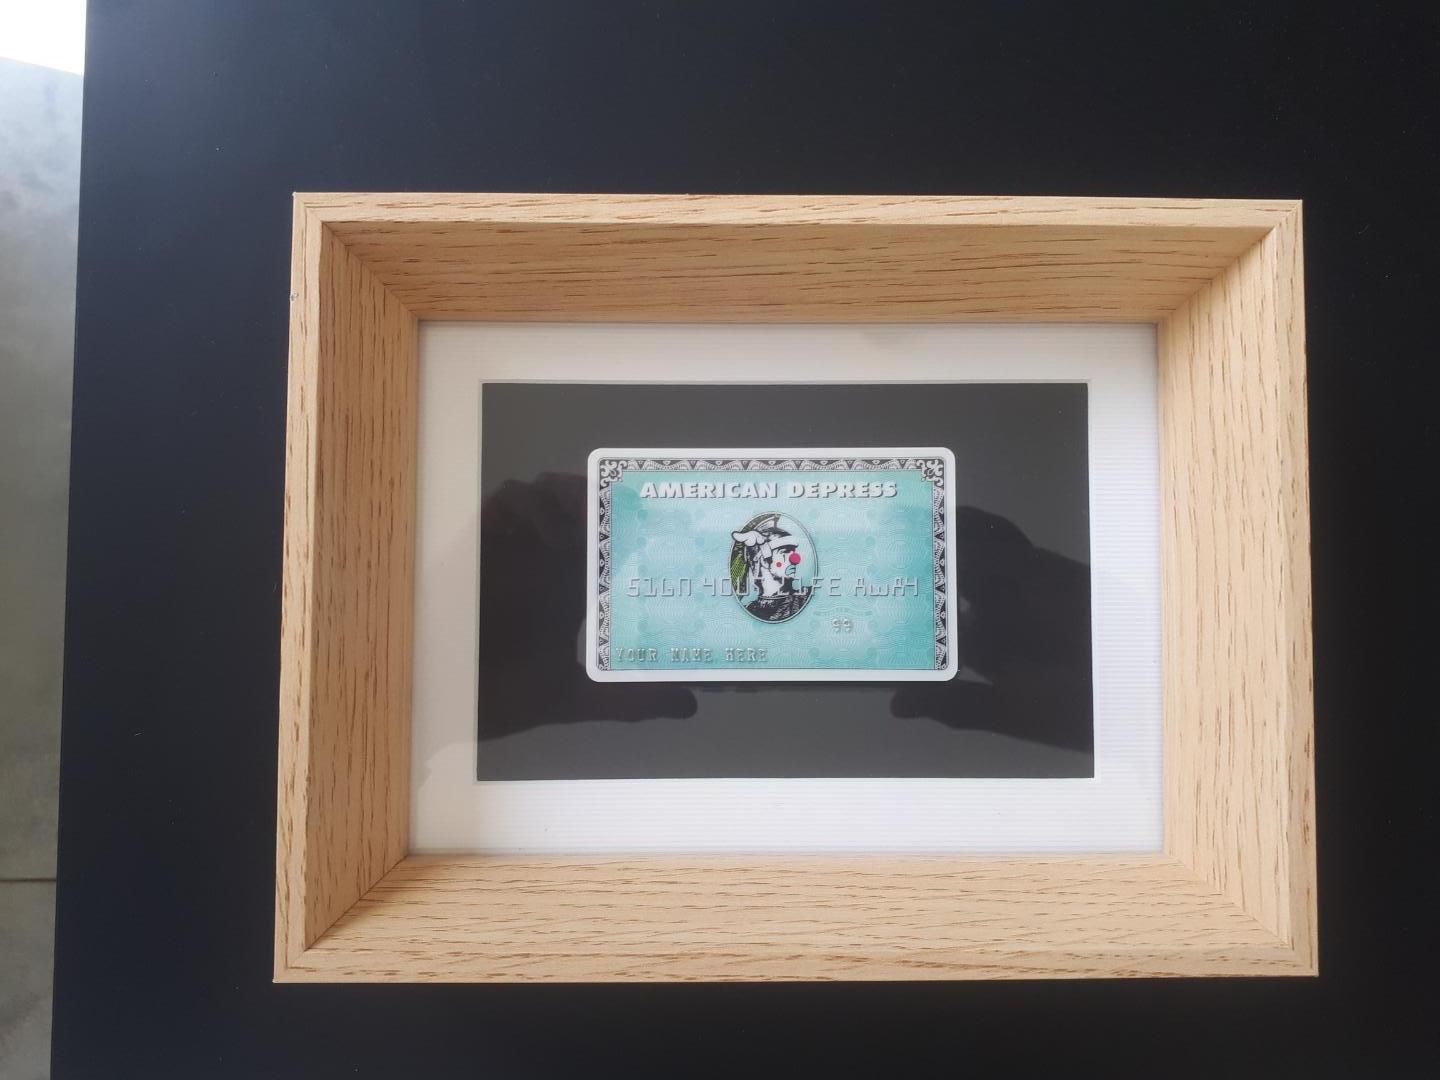 Null D*FACE 

美国抑郁症, 2008

带有艺术家印章的银行卡/丝网印刷品 - 伦敦的Stolenspace画廊

5,4x8,5厘米